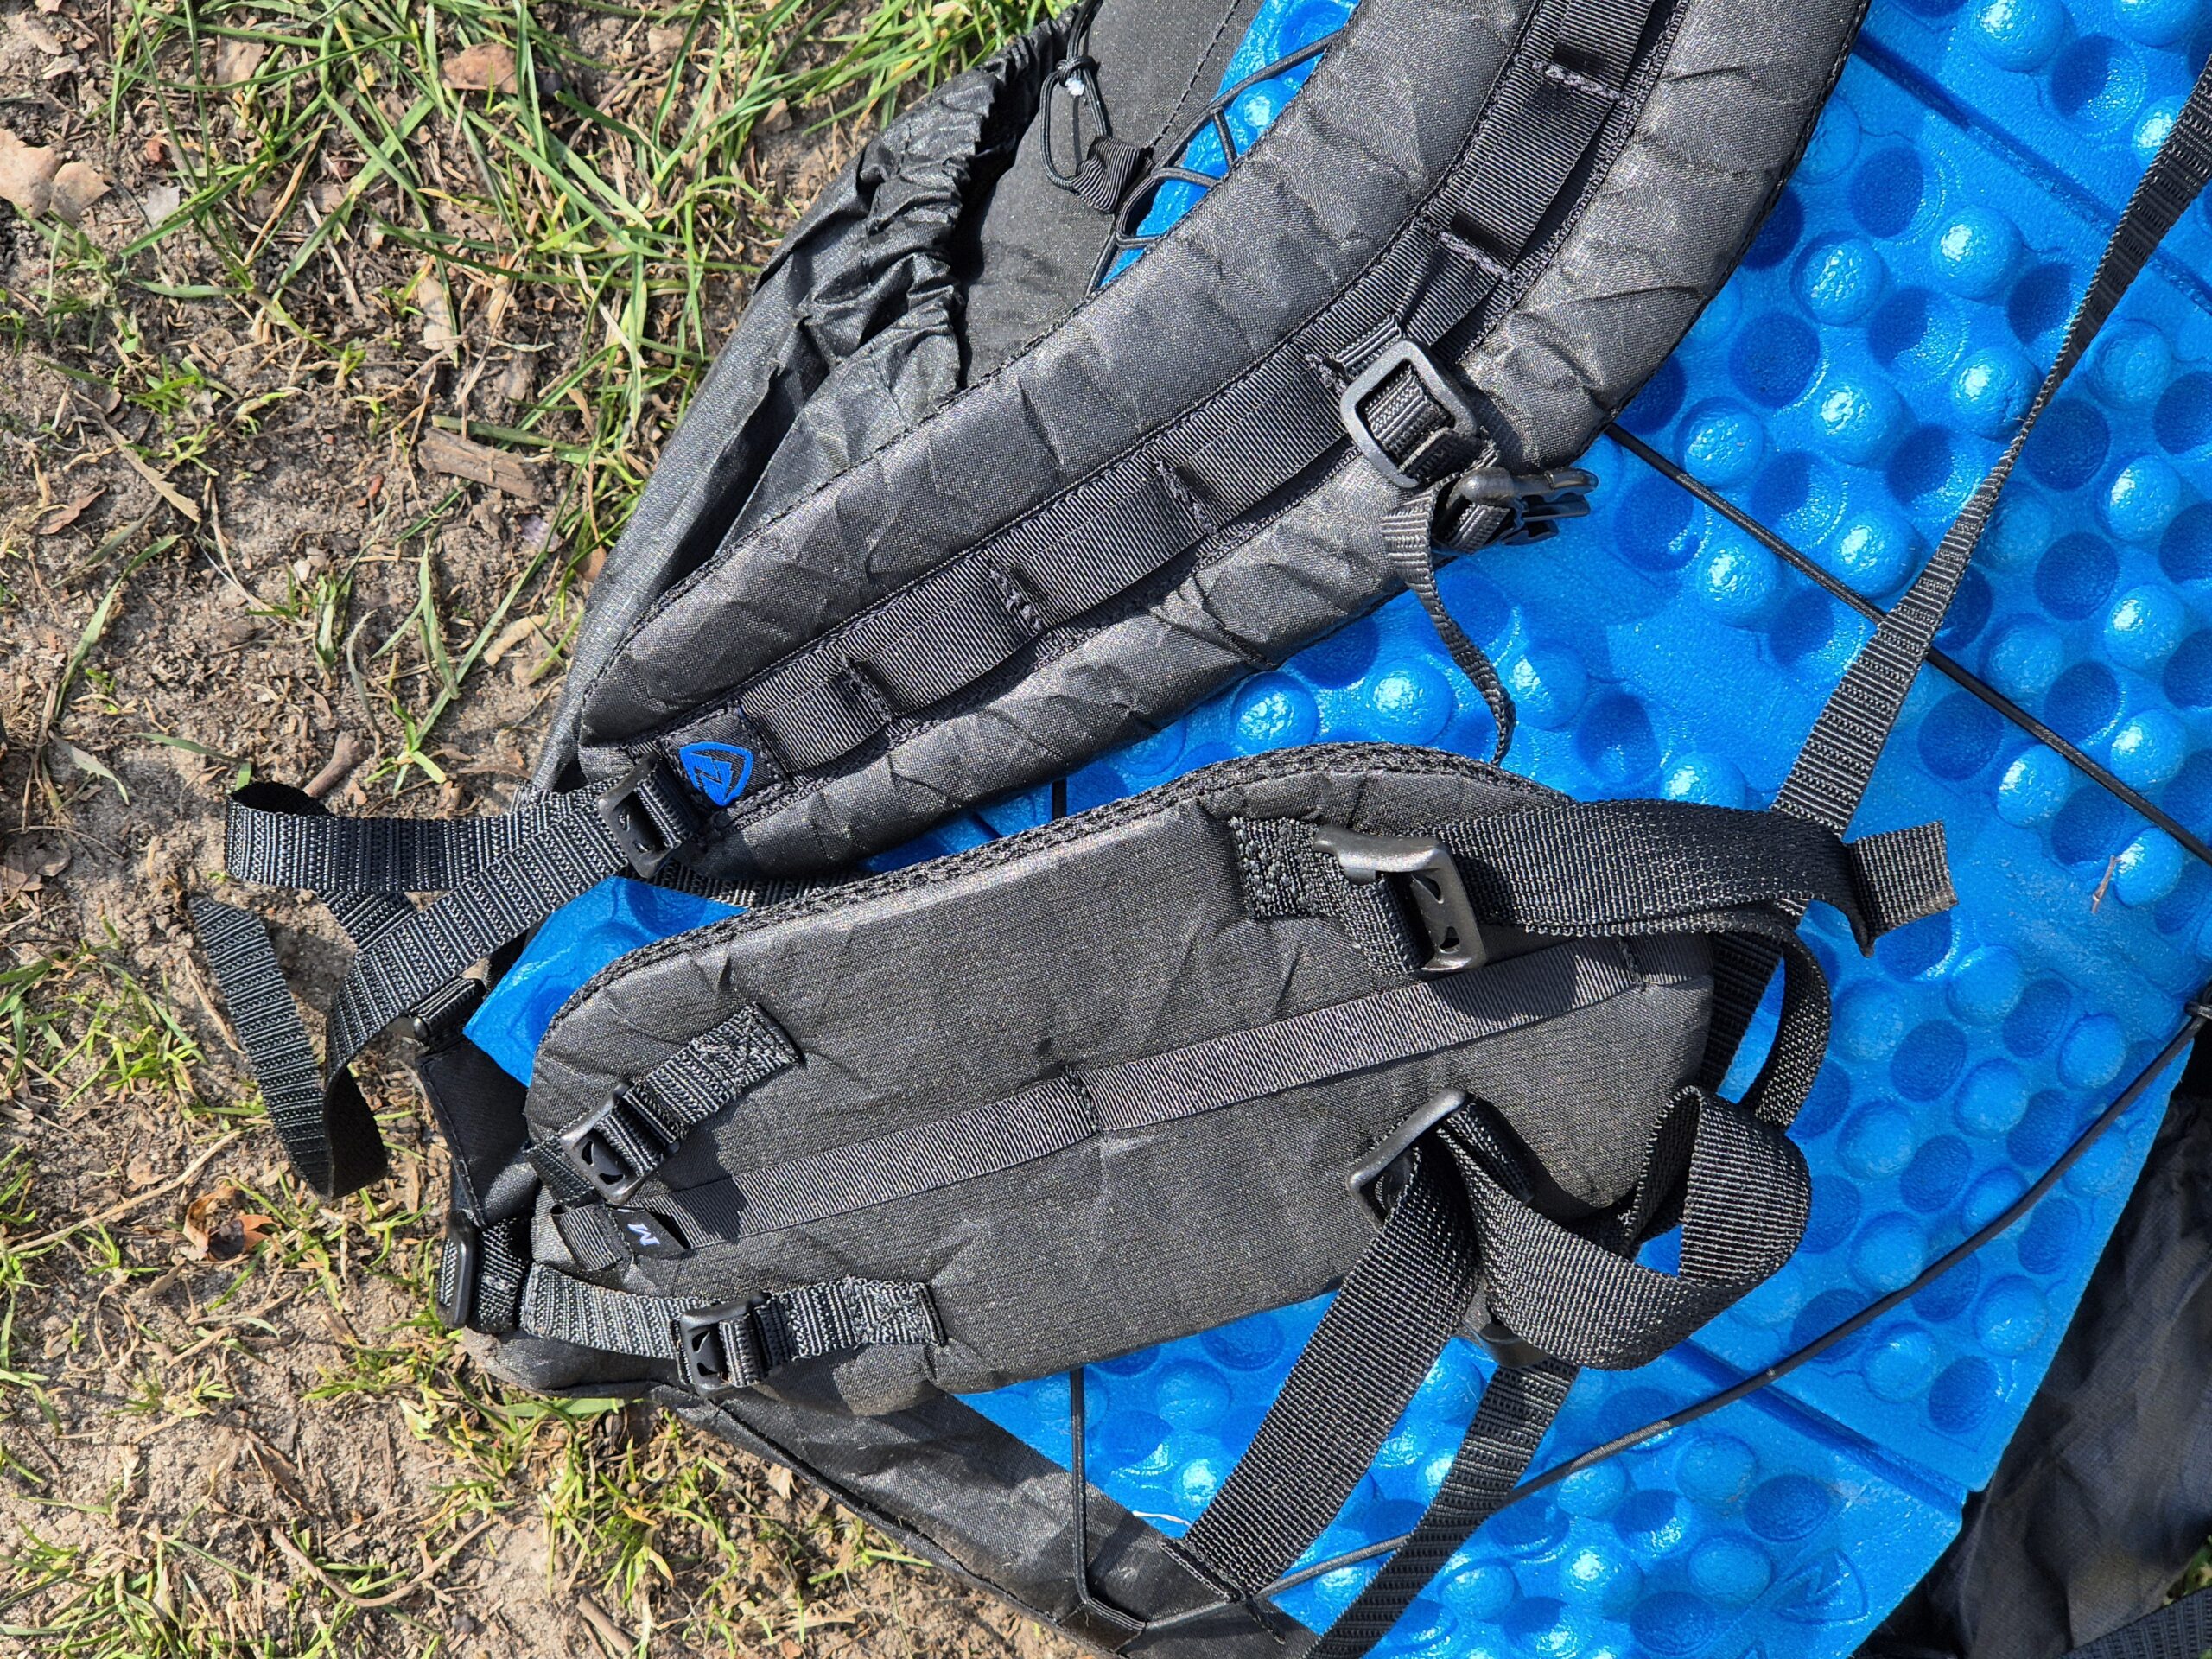 Gute Polsterung an Padded Belt und Träger des Zpacks Nero Ultra 38L Backpack